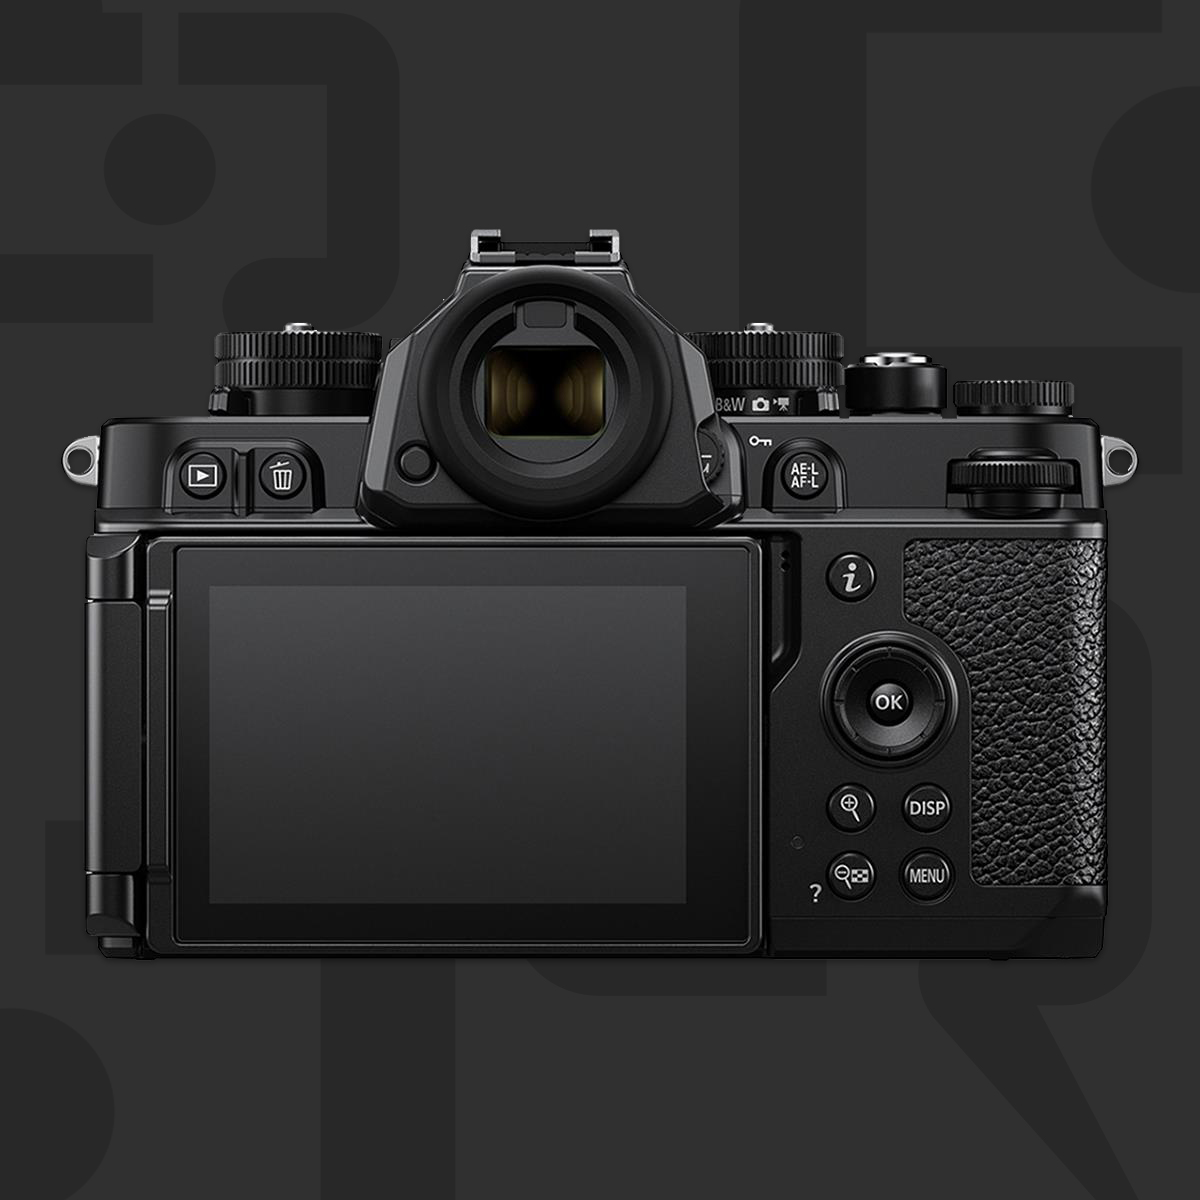 nikonzf 02 - Nikon officially announces the Z f retro inspired camera body